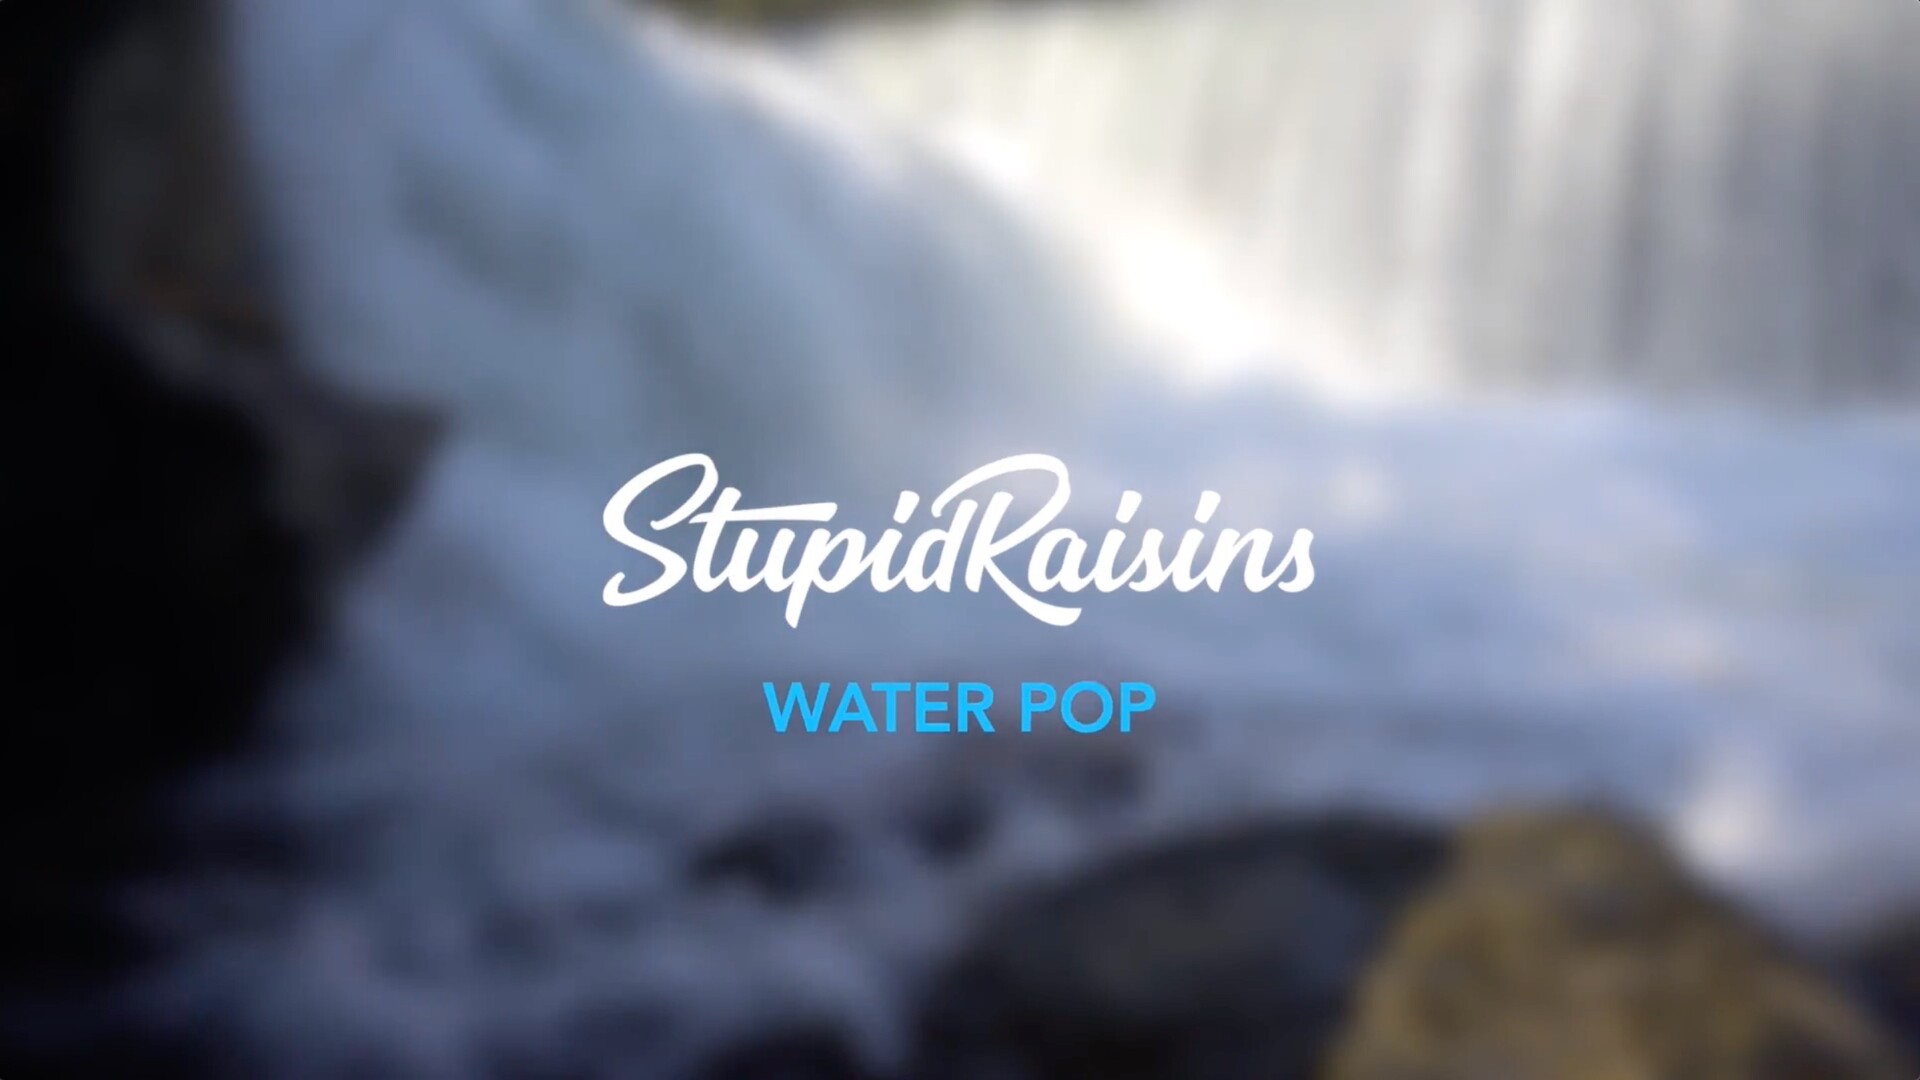  fcpx插件:水滴运动轨迹标题转场 Stupid Raisins Water Pop